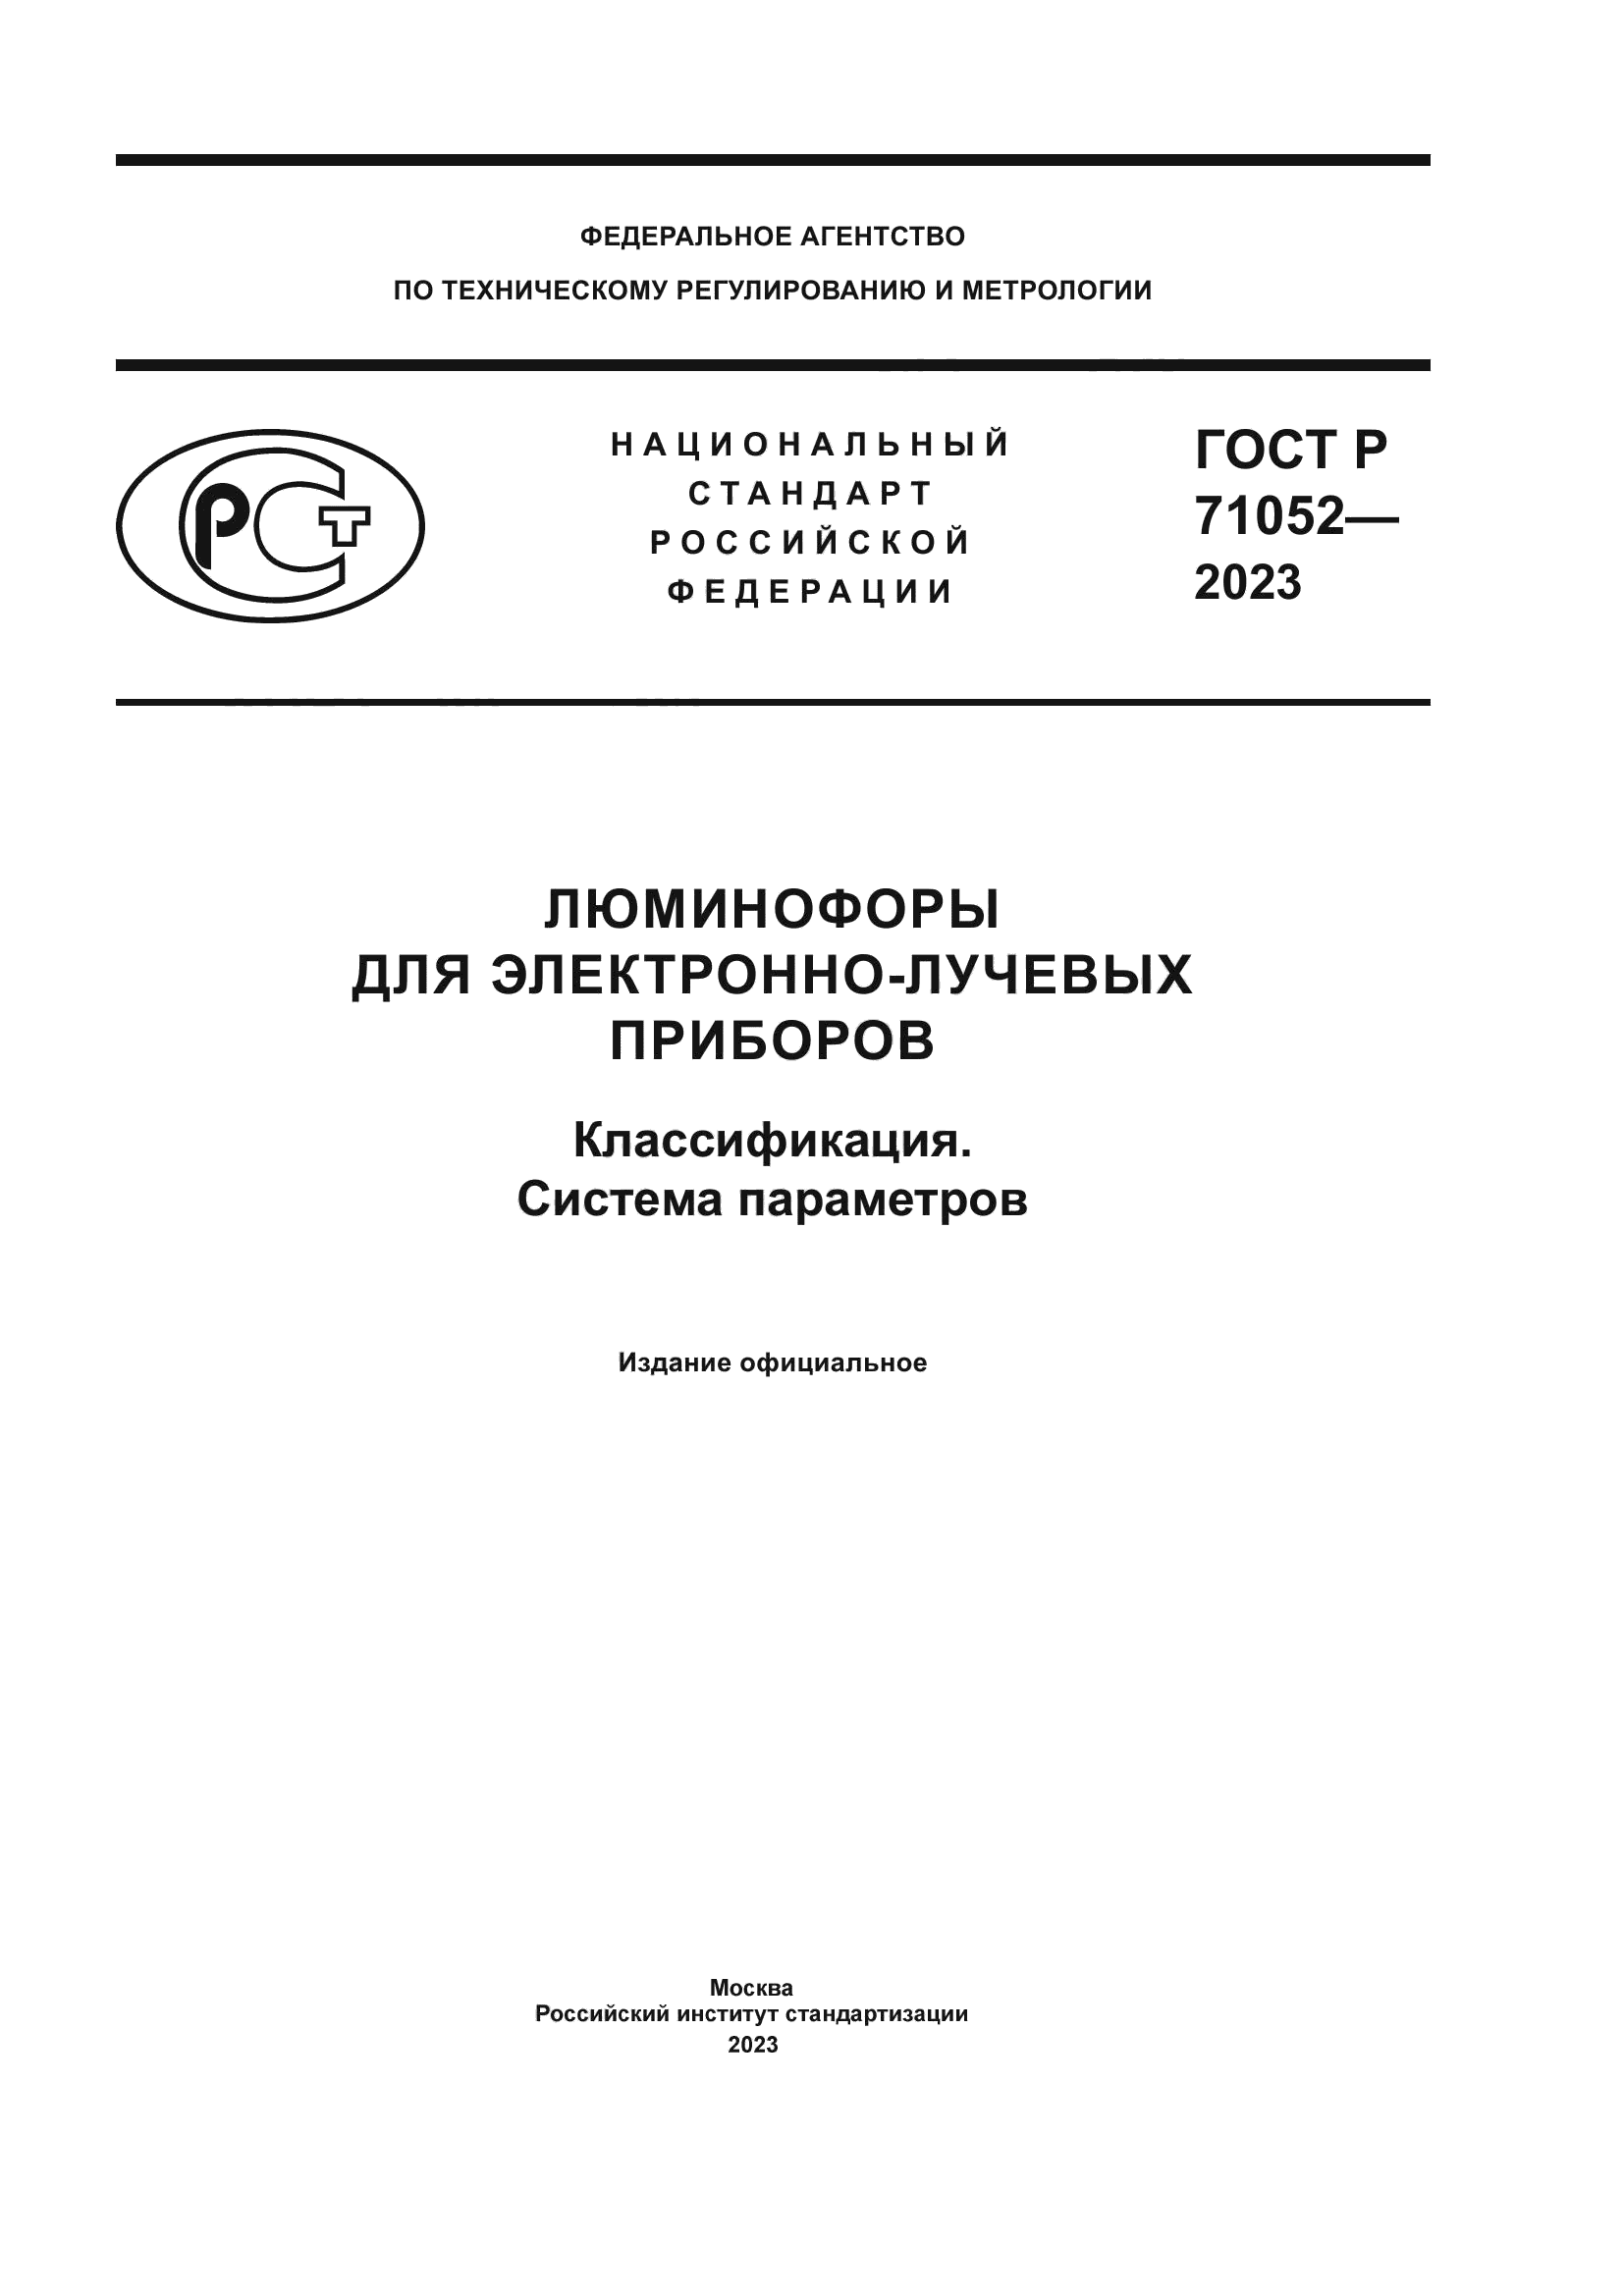 ГОСТ Р 71052-2023